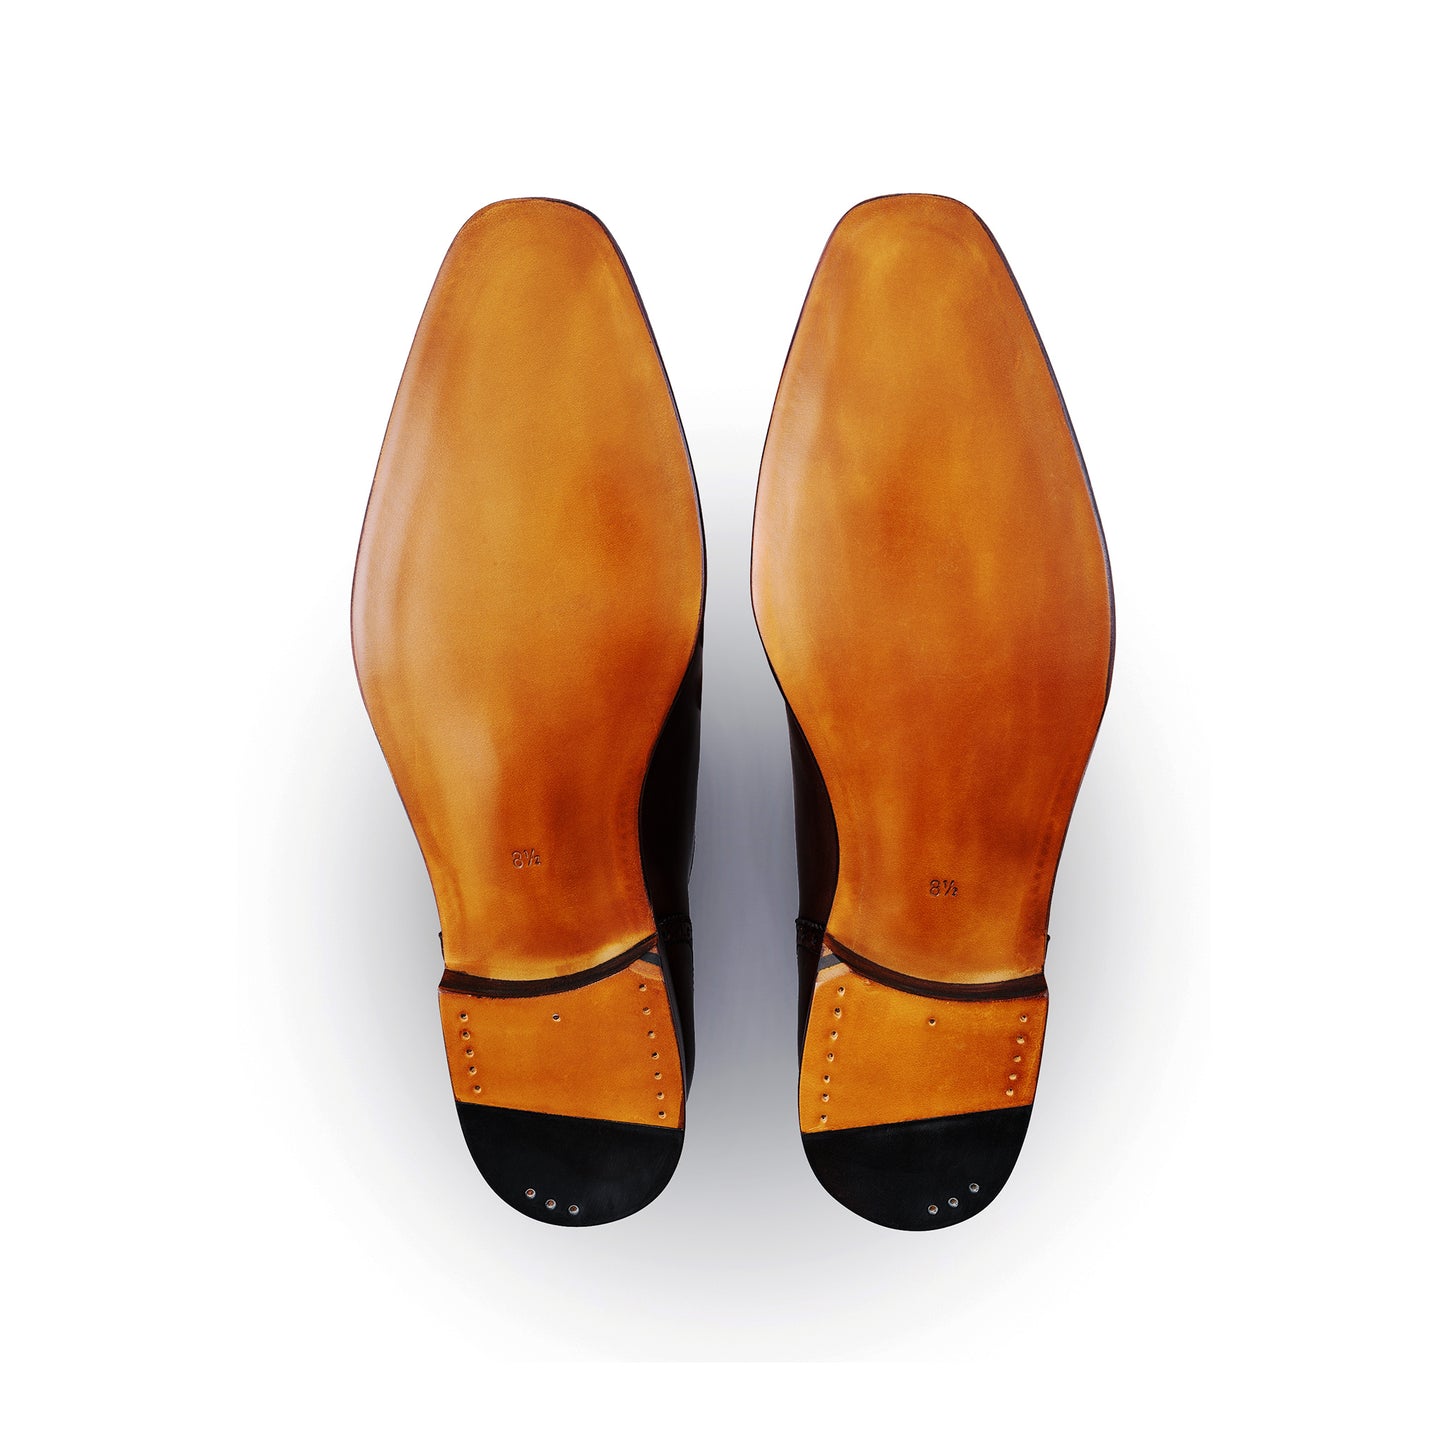 TLB Mallorca leather shoes 555 / ALAN / BOXCALF BLACK